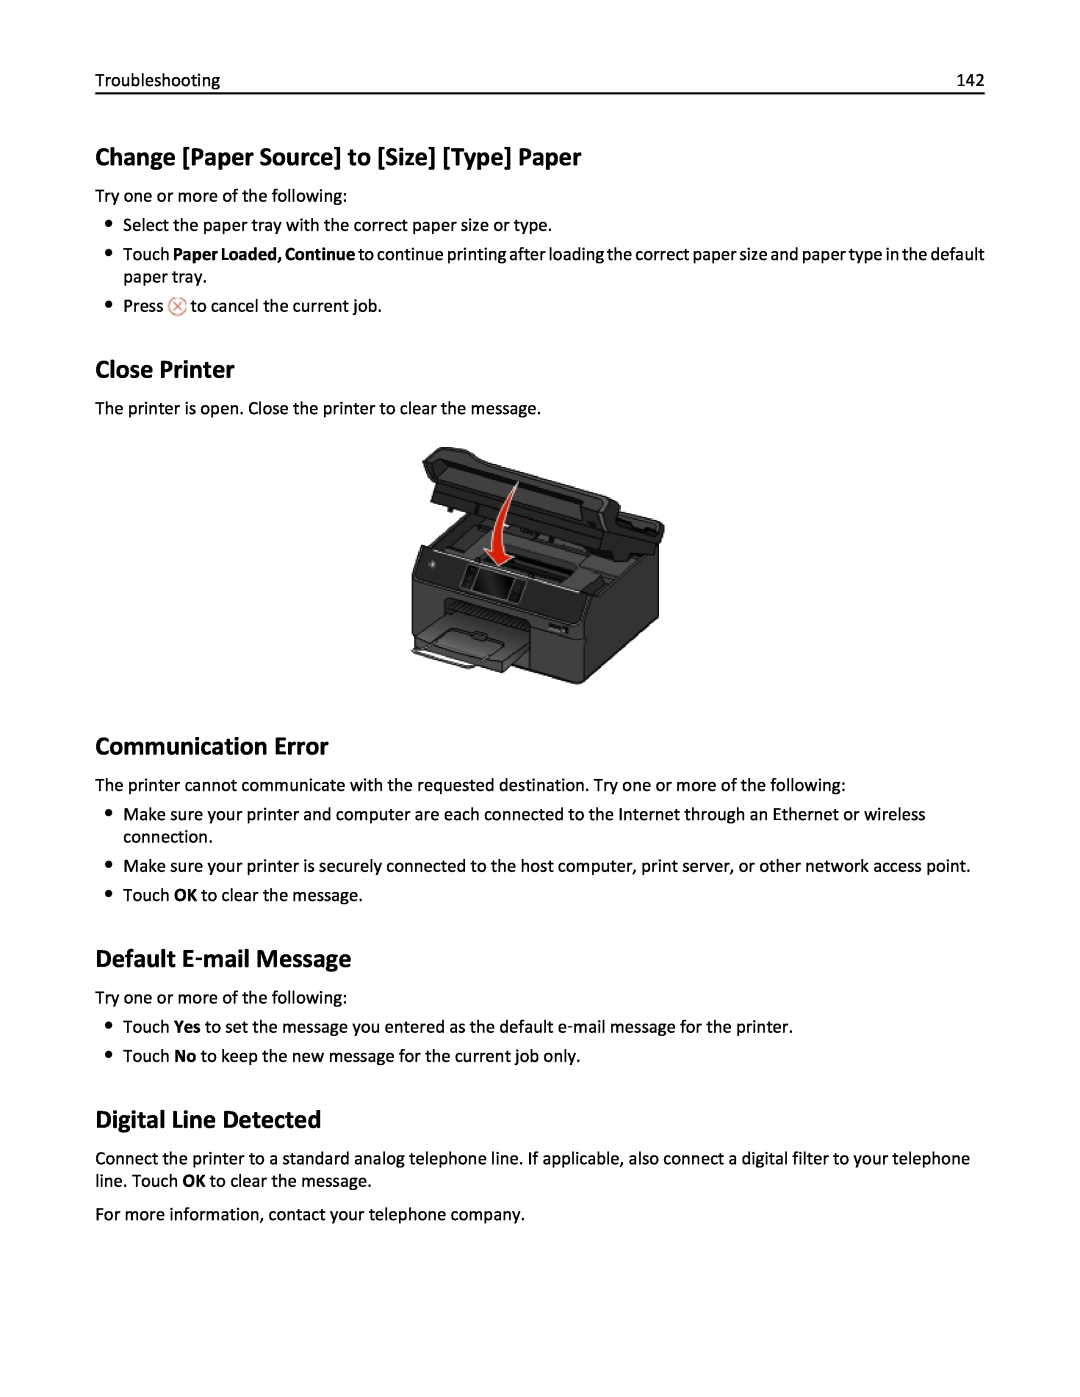 Lexmark 20E, 200 manual Change Paper Source to Size Type Paper, Close Printer, Communication Error, Default E‑mail Message 